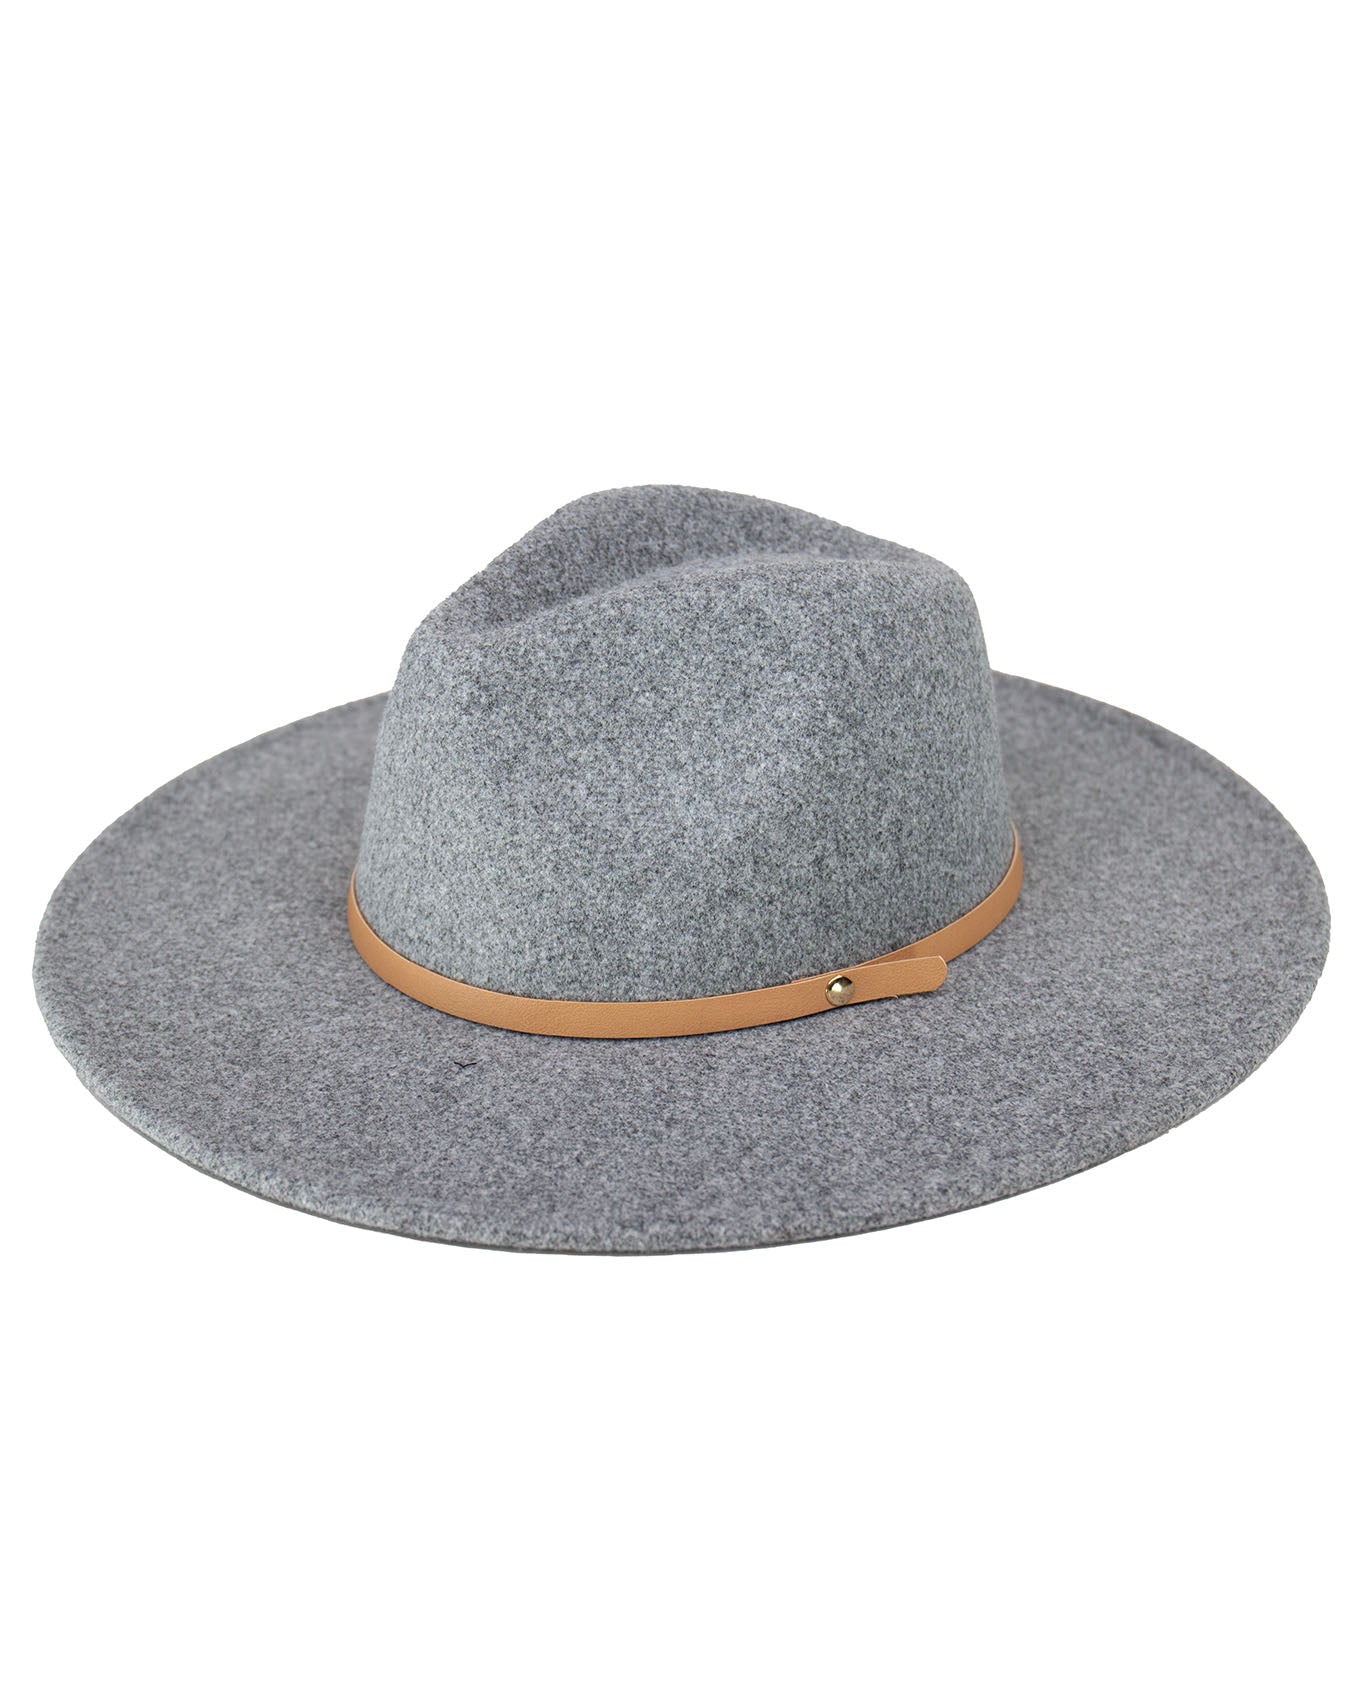 stock shot of wide brim felt hat in charcoal